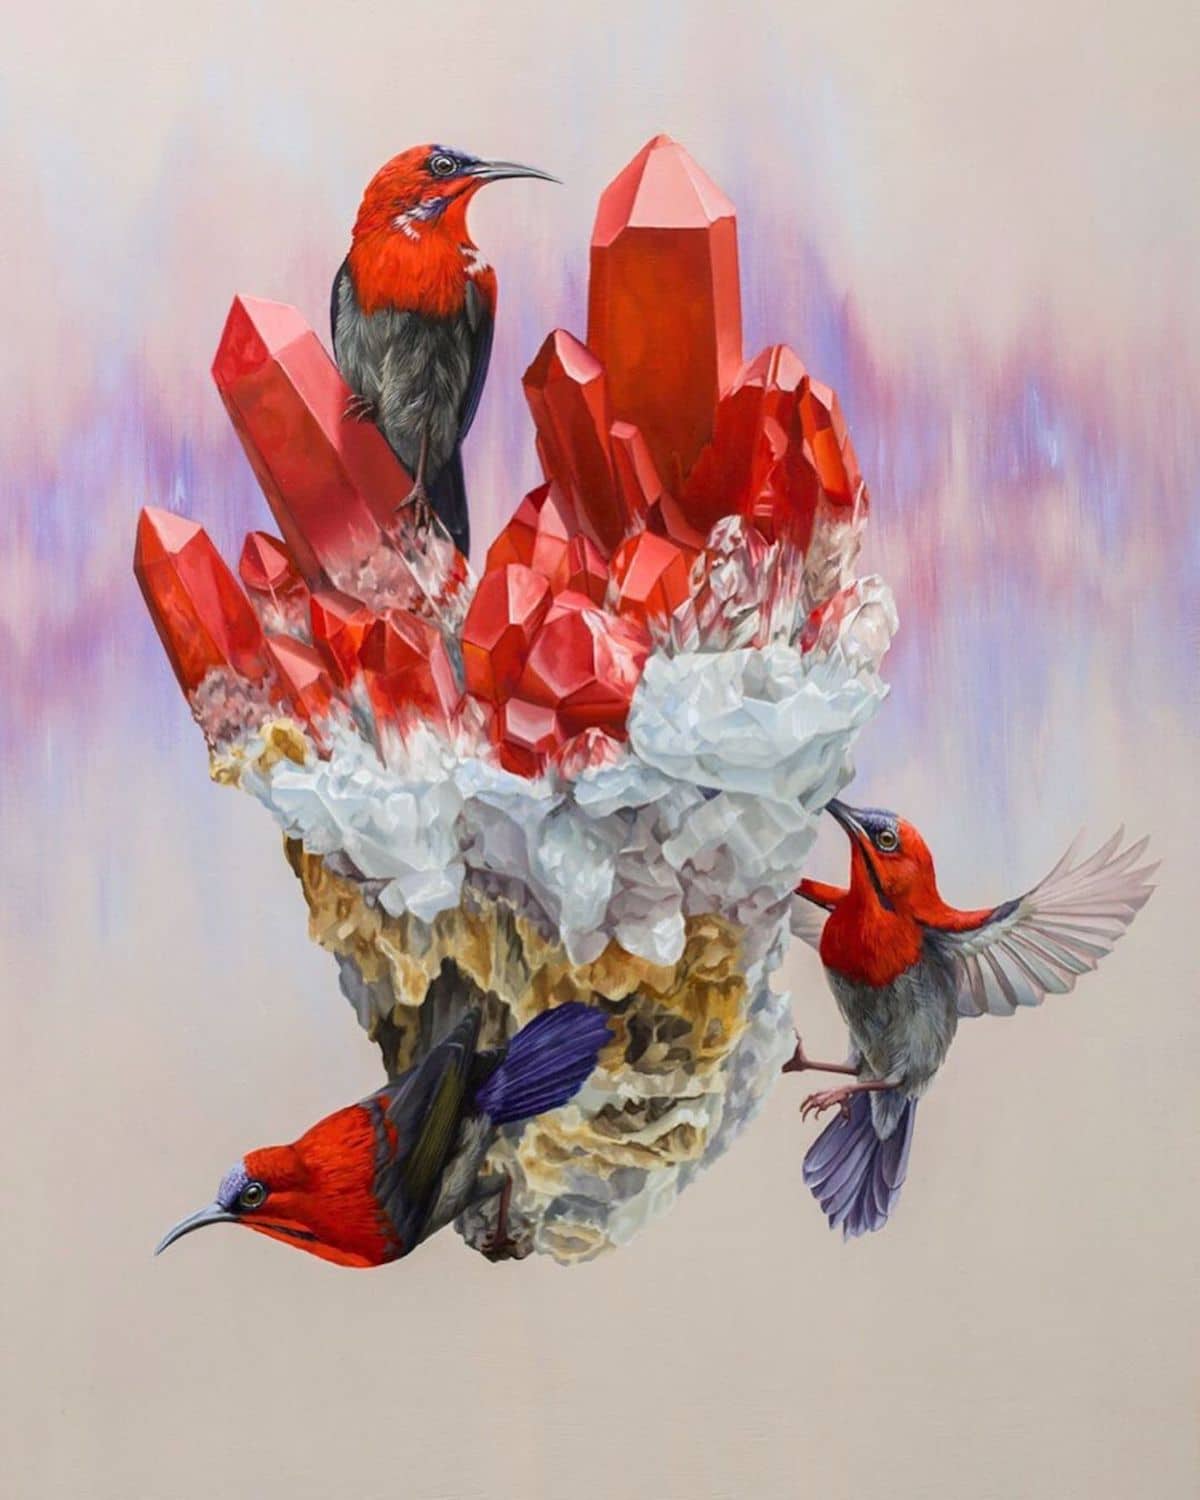 Pinturas de pájaros surrealistas por Jon Ching